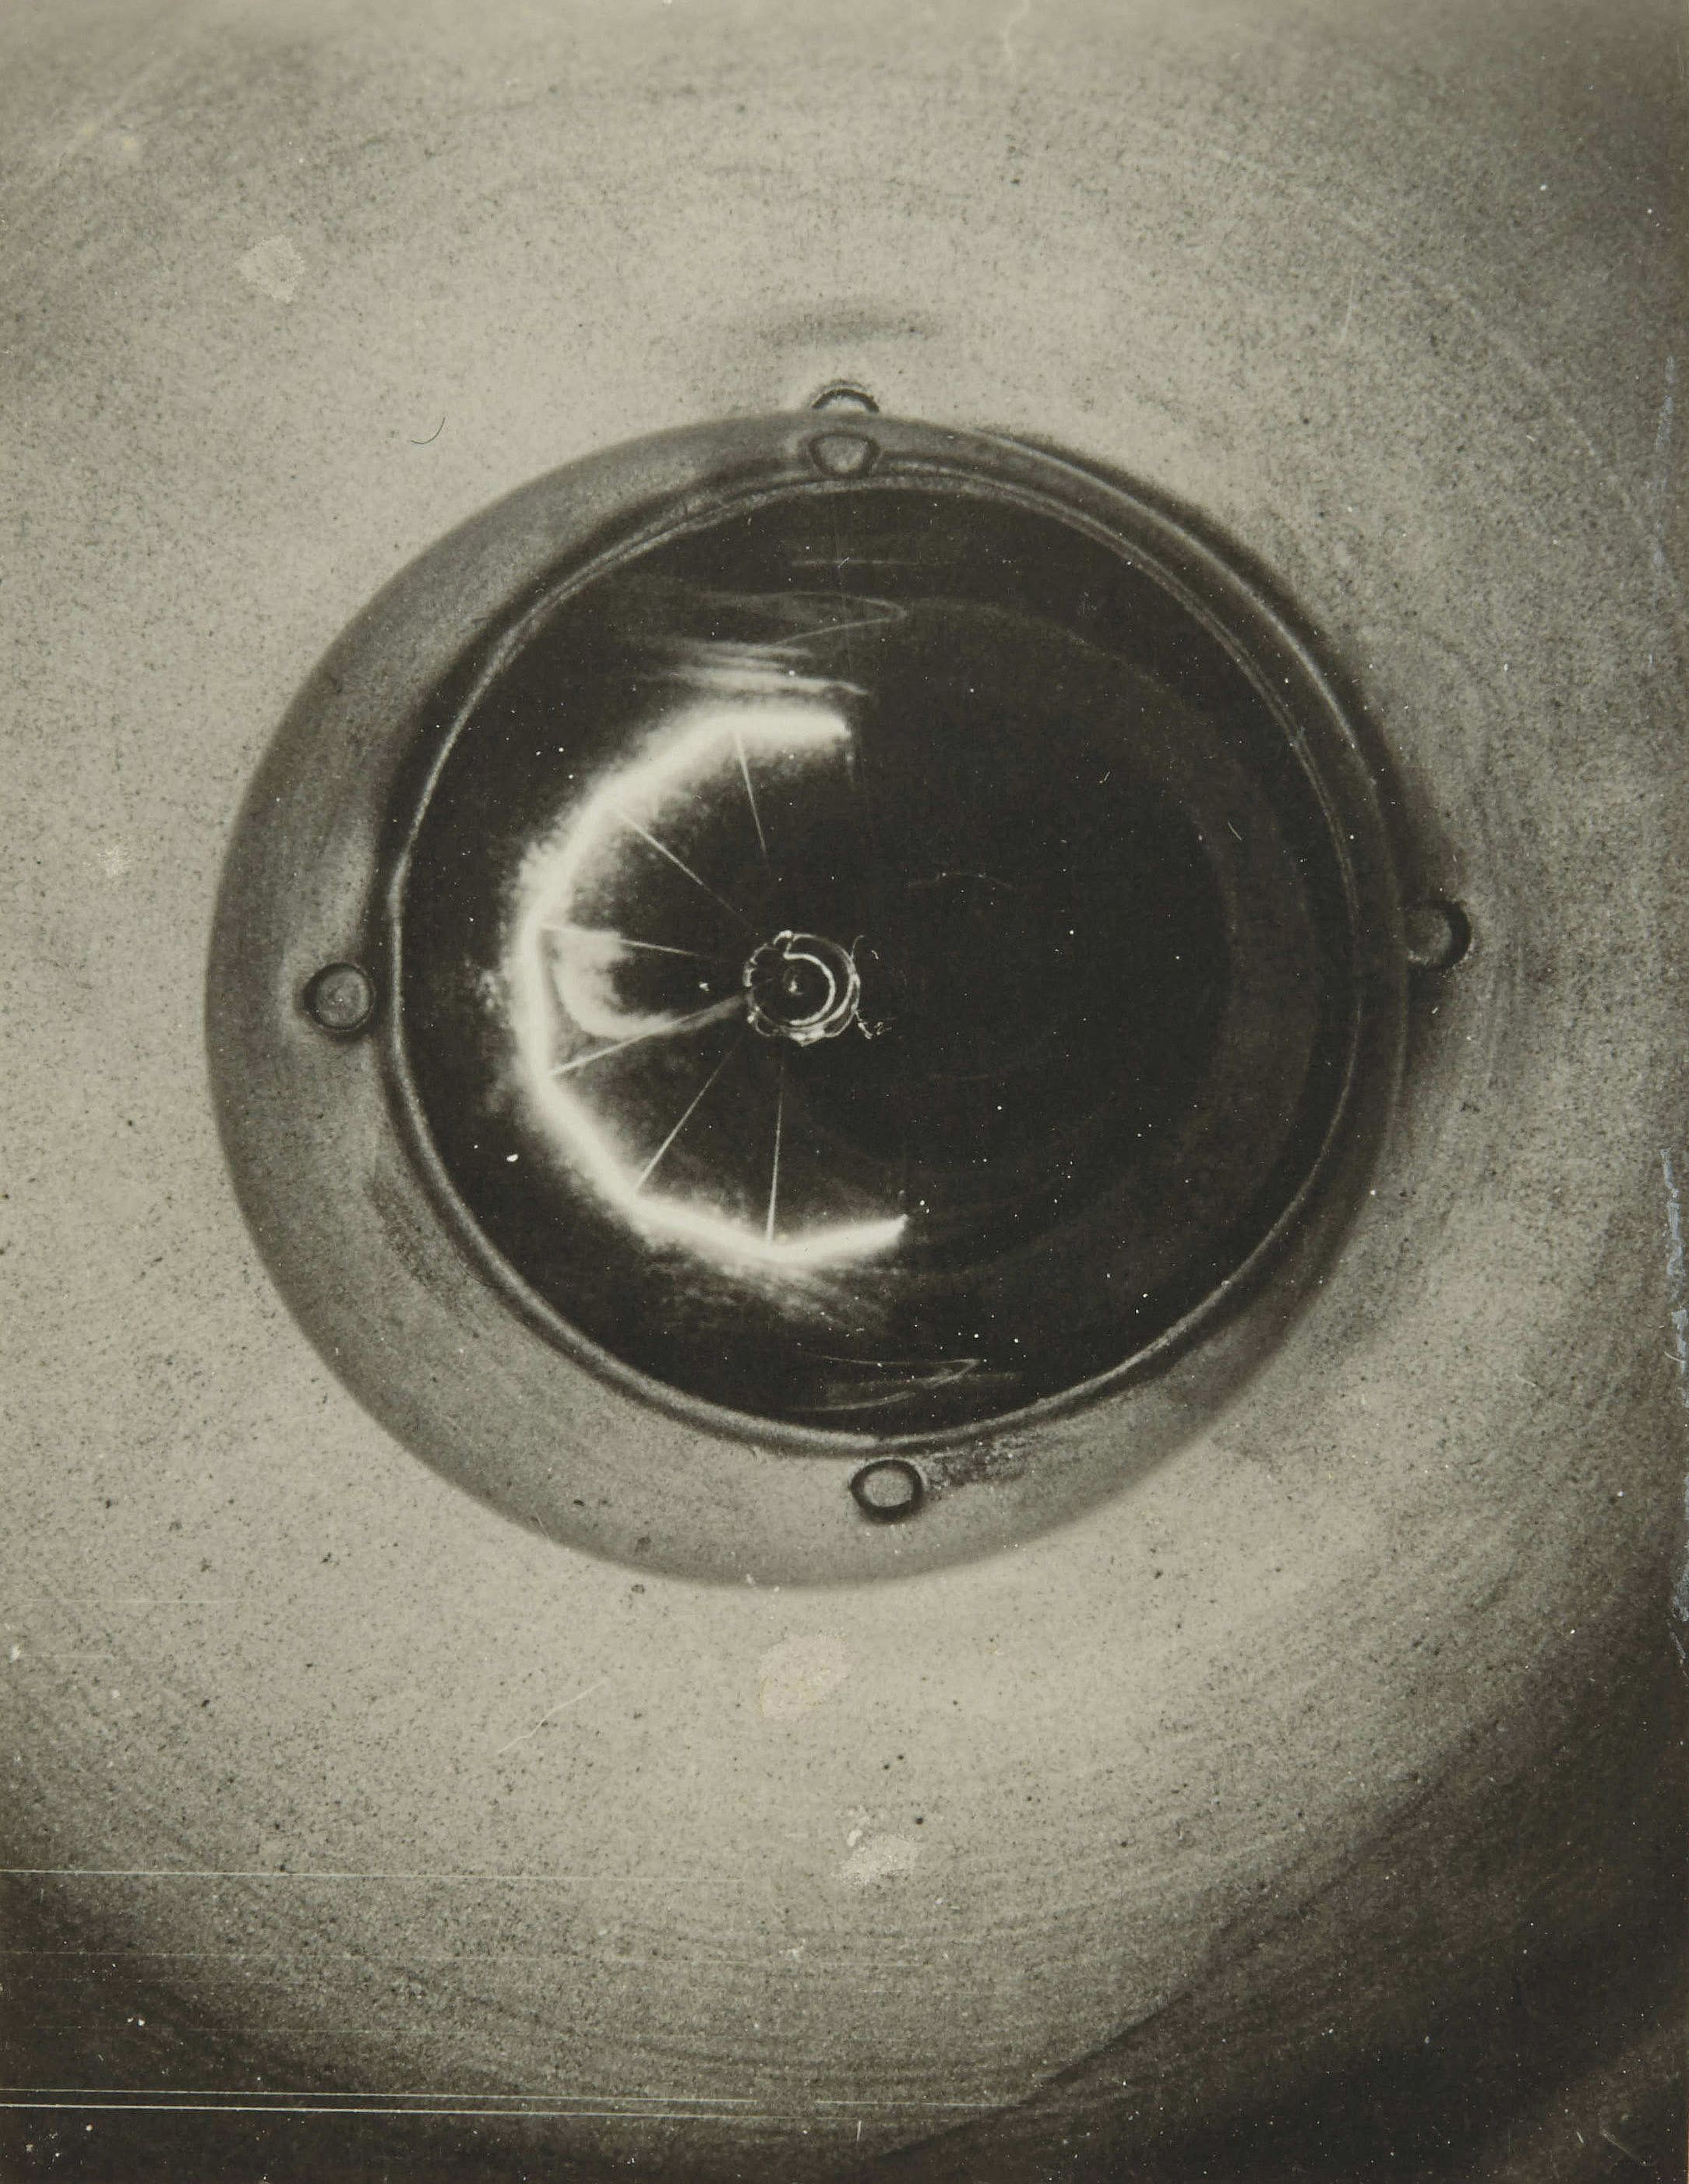 imre kinszki, light bulb, budapest, c. 1930; (5.7 cm x 4.3 cm) private collection